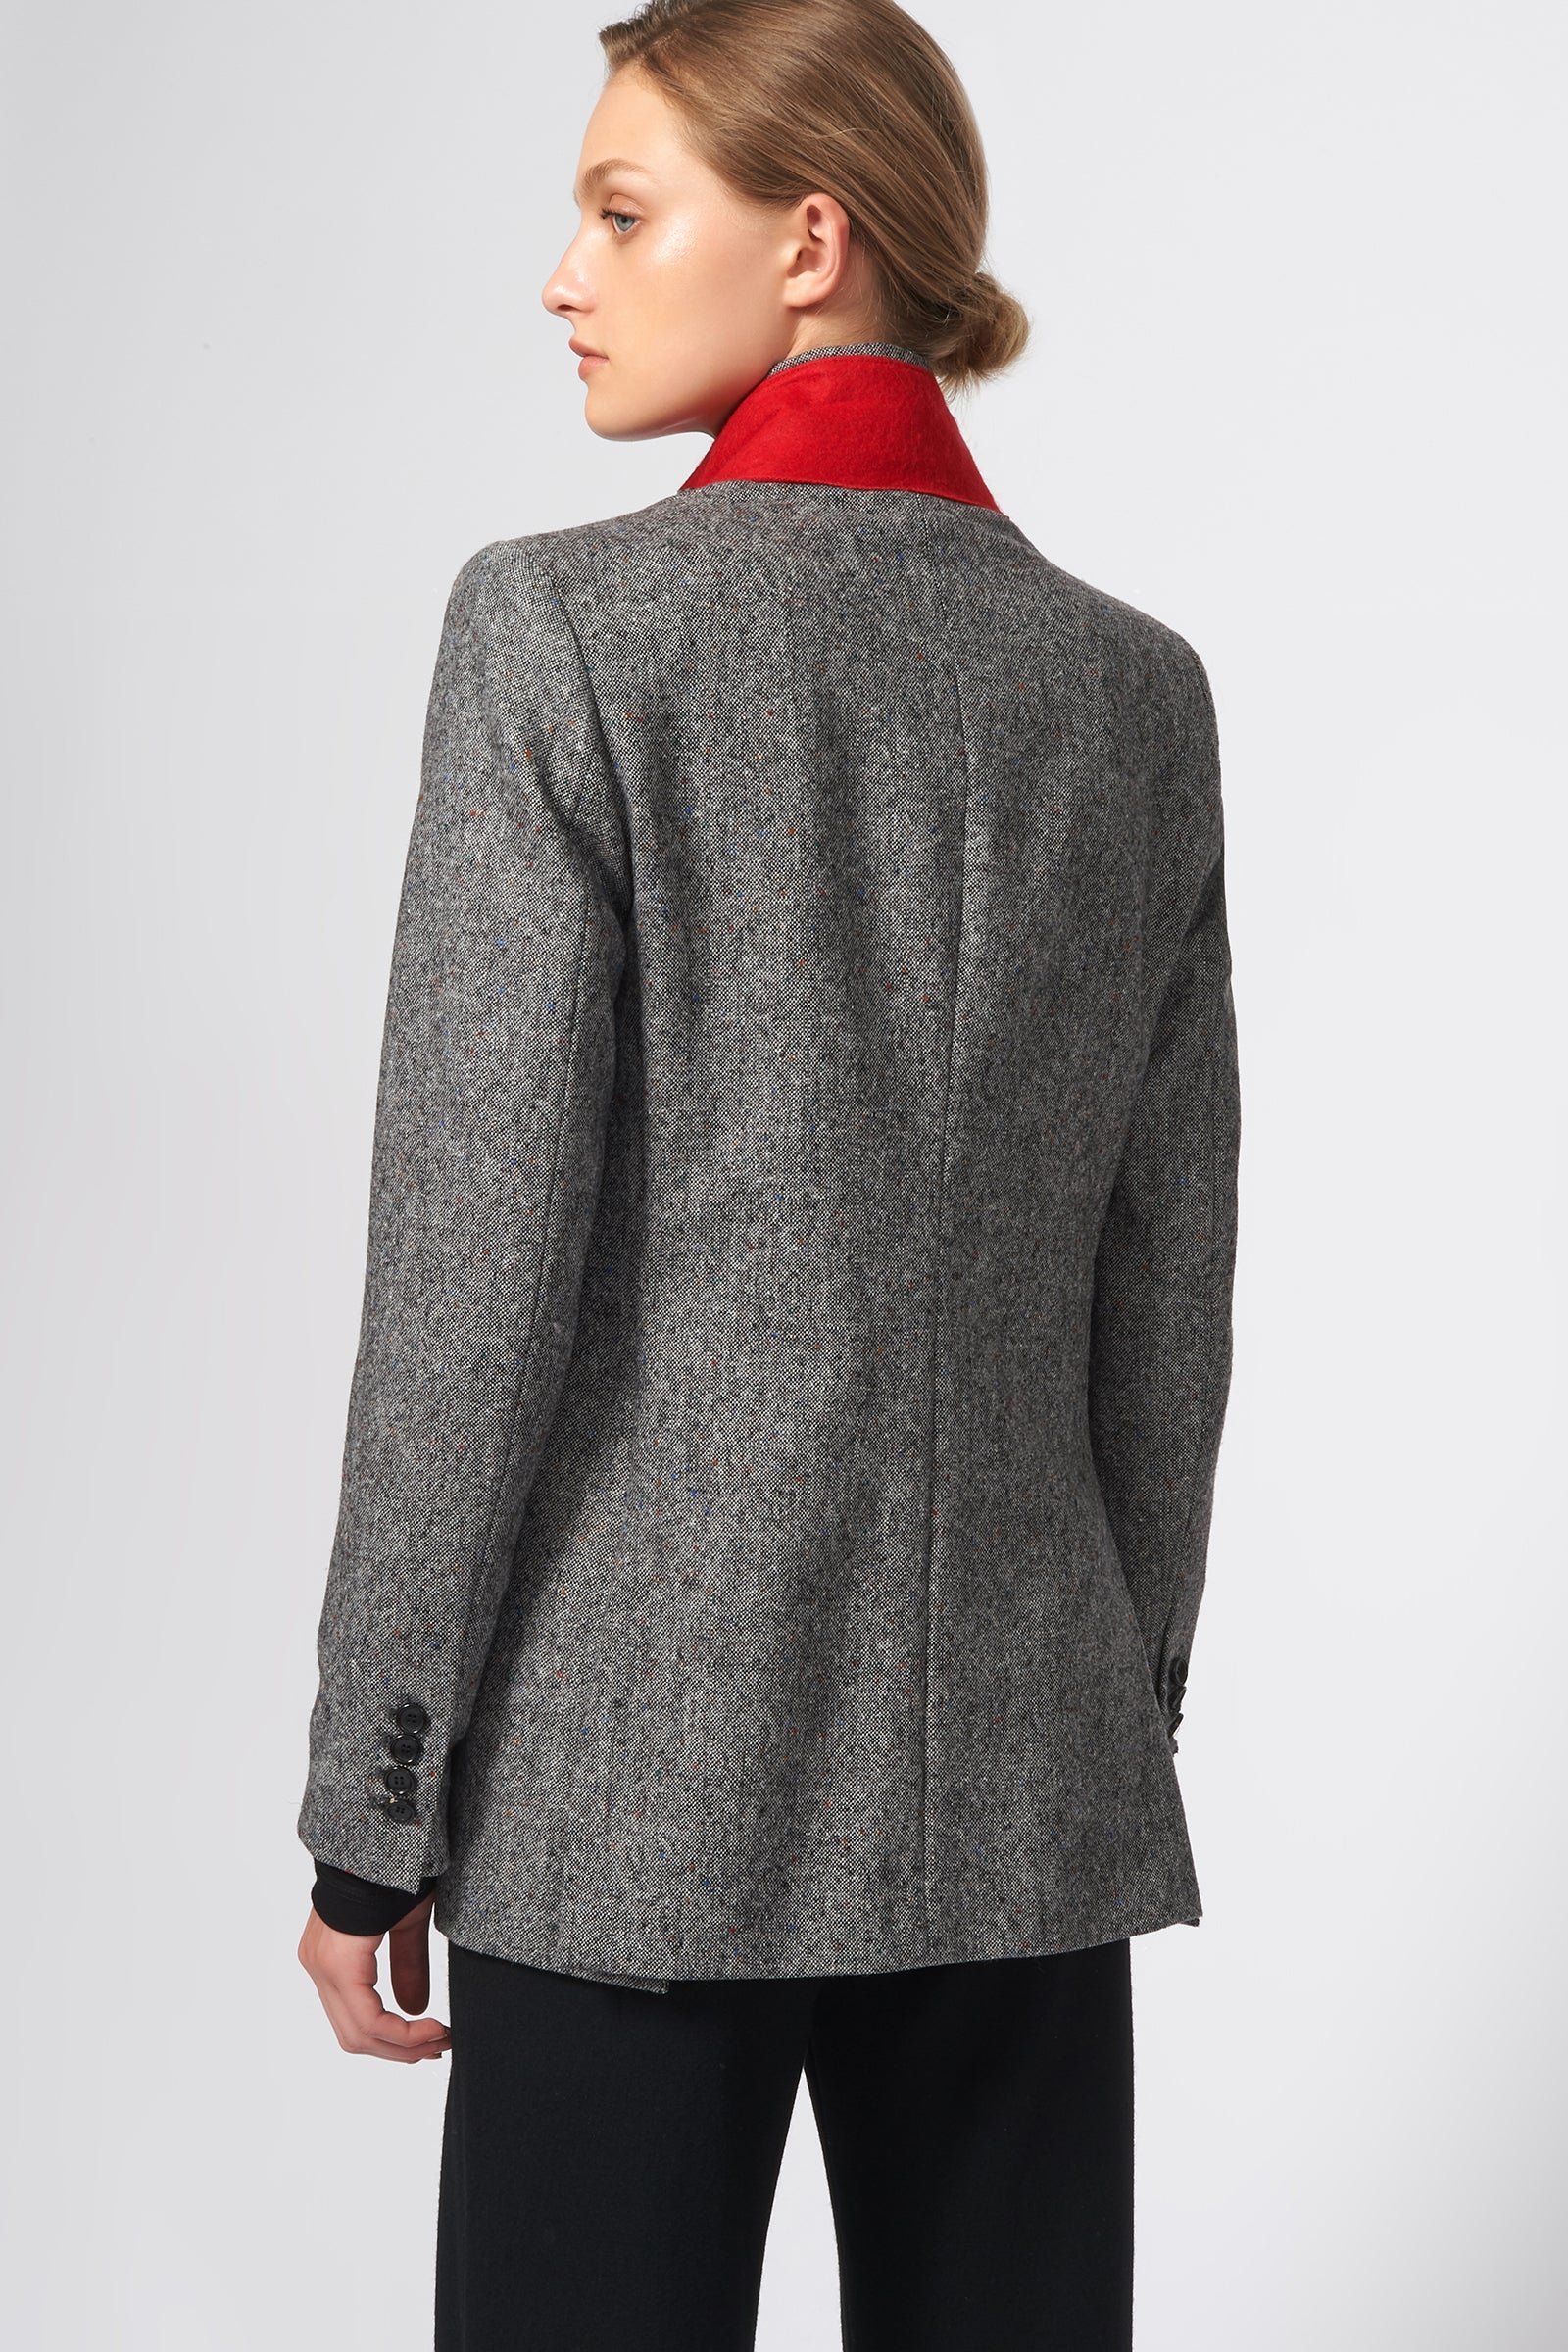 Kal Rieman Classic Notch Blazer in Grey Tweed on Model Front Full View